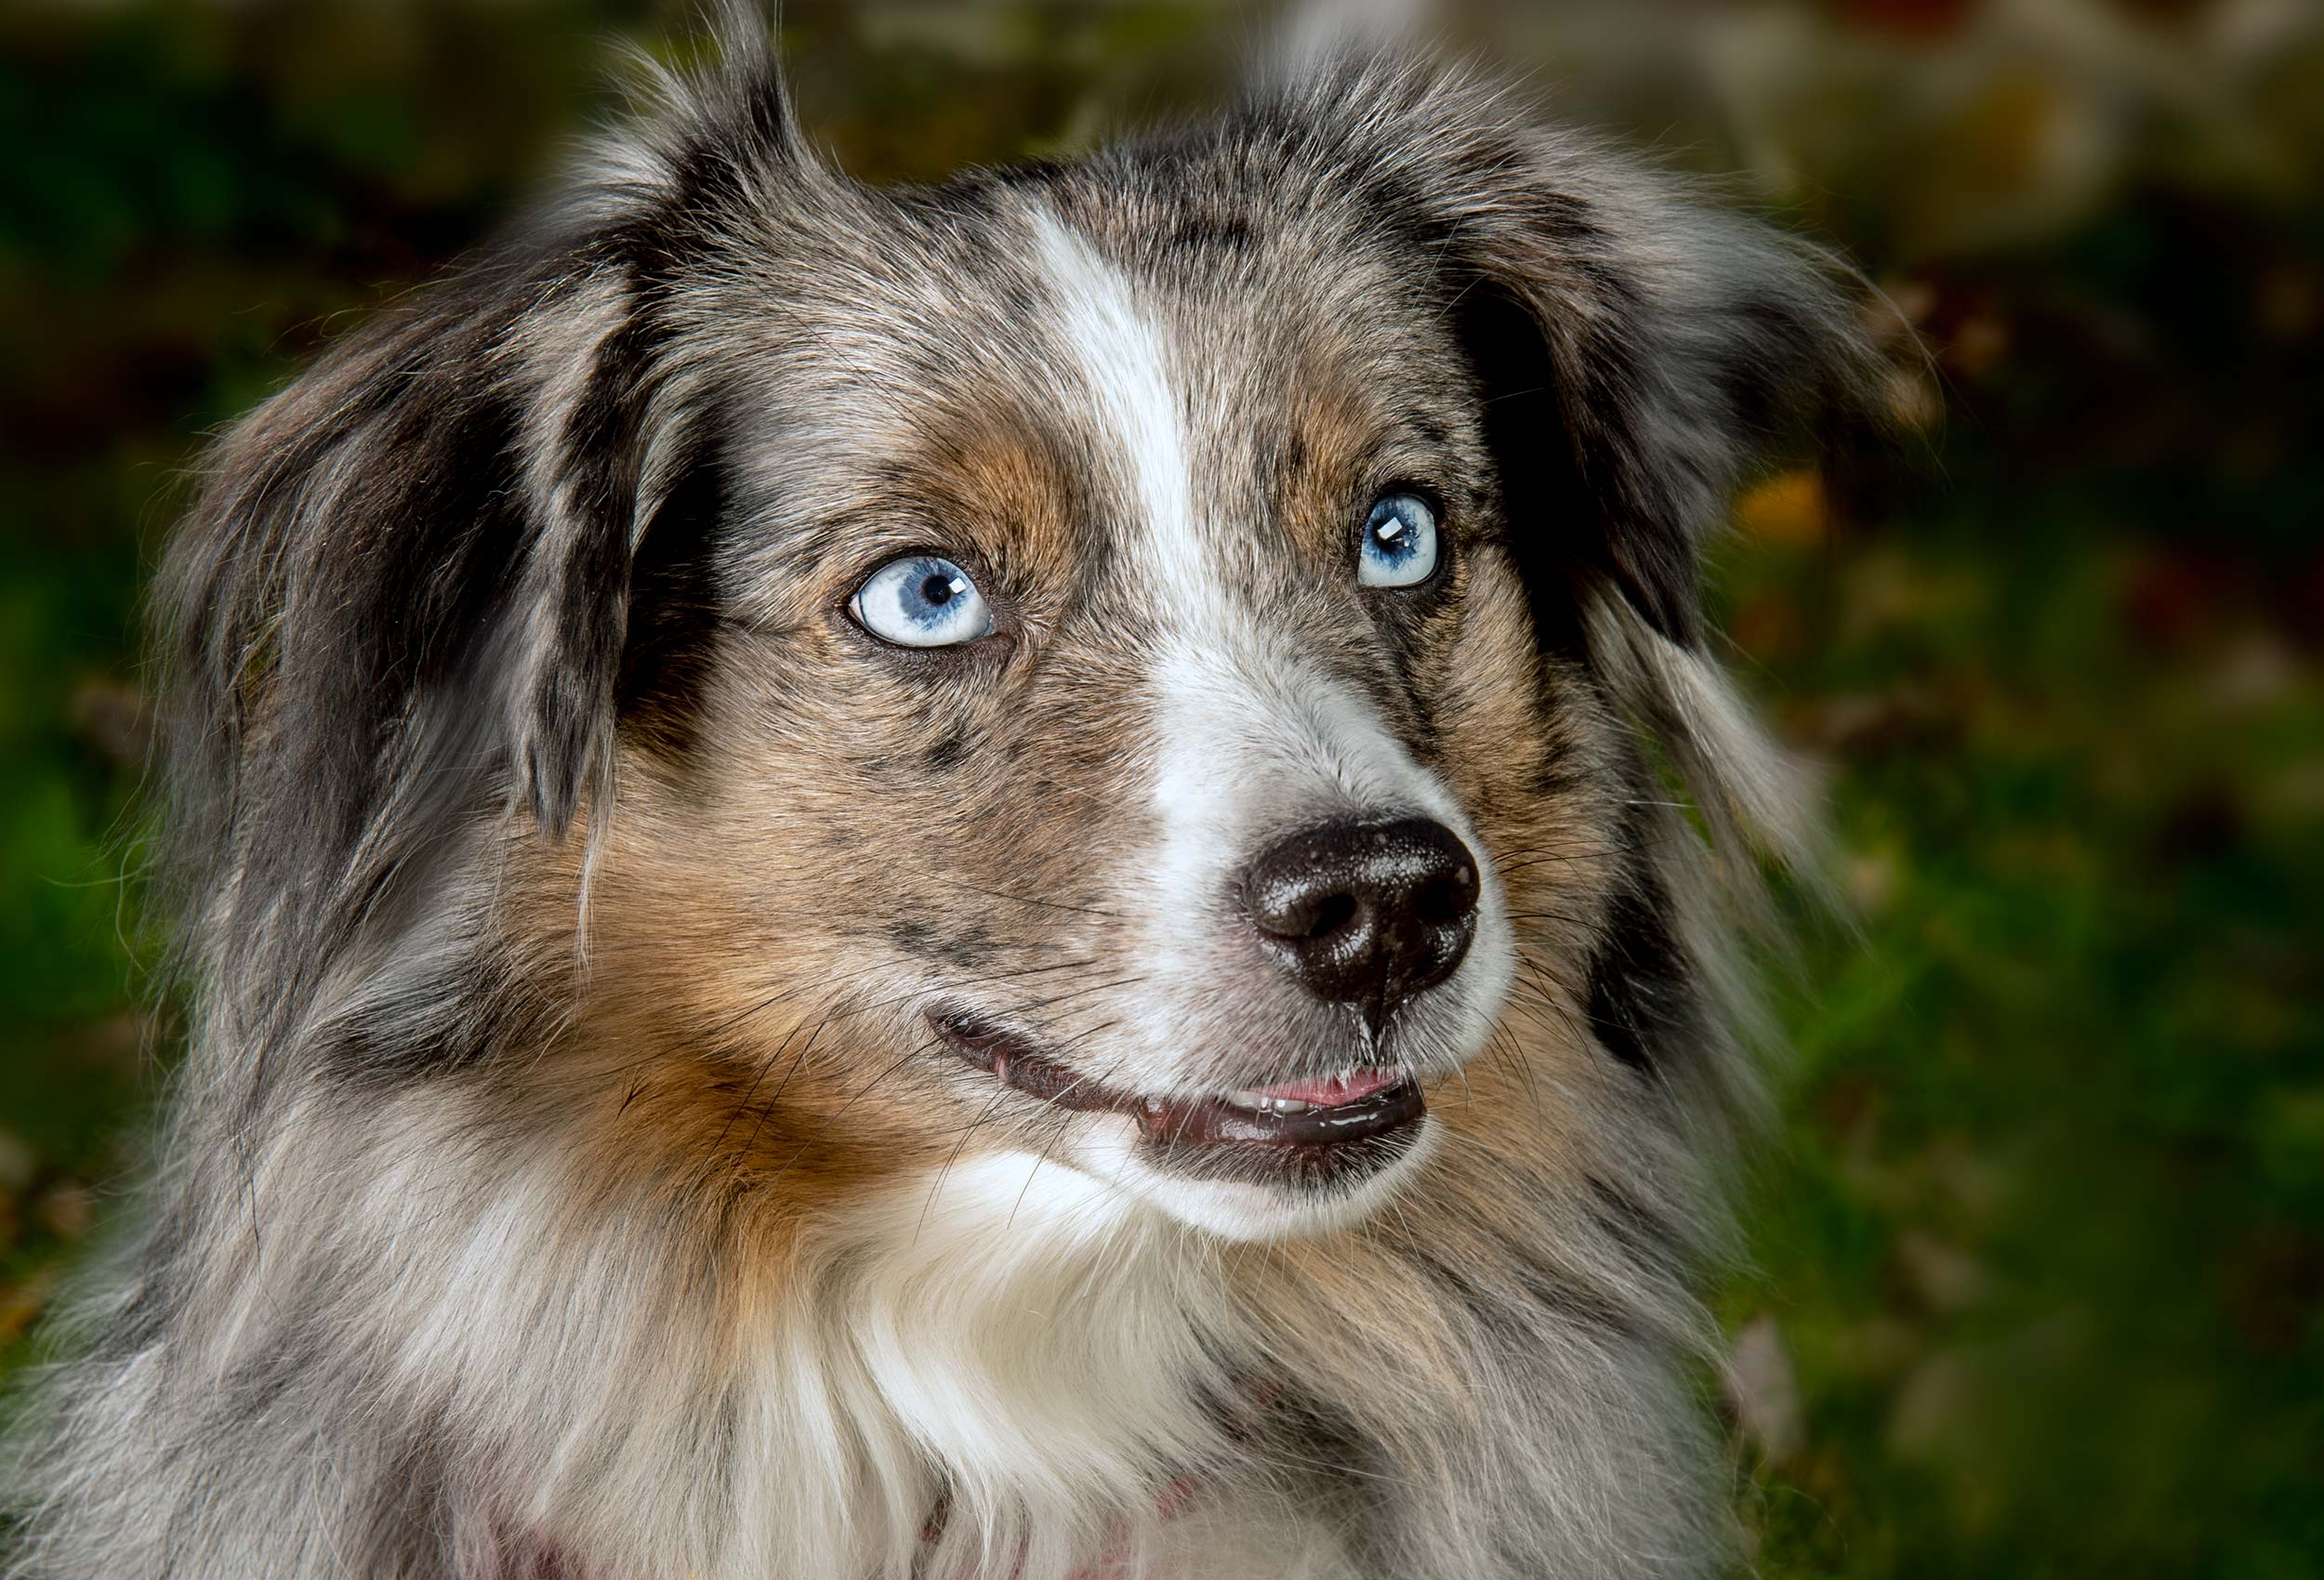 Blue eyed Australian Shepherd dog portrait  outside in park